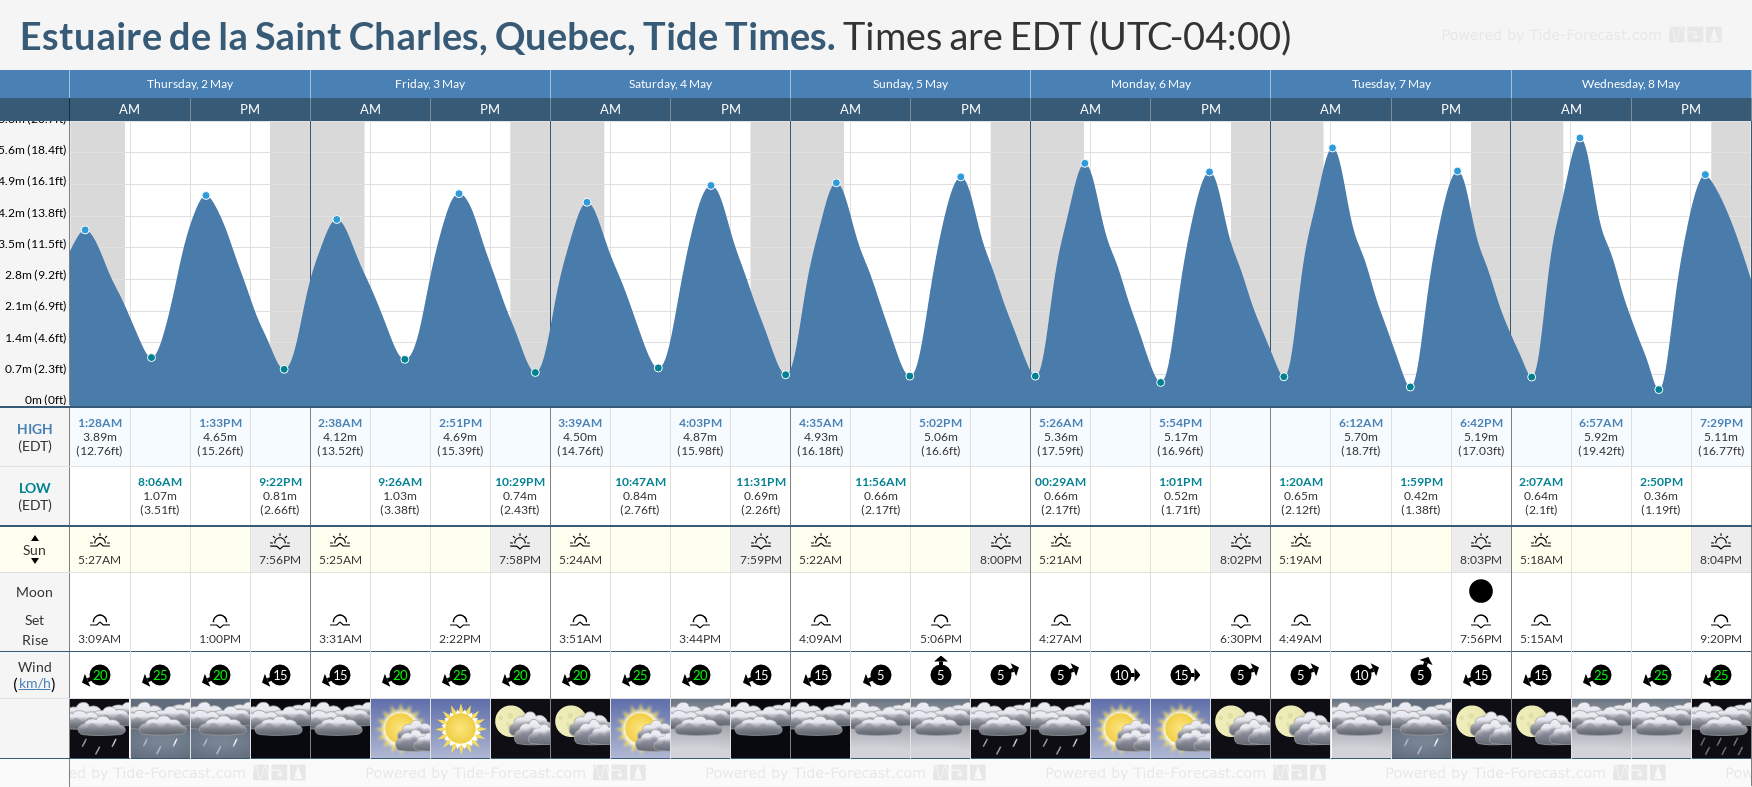 Estuaire de la Saint Charles, Quebec Tide Chart including high and low tide tide times for the next 7 days